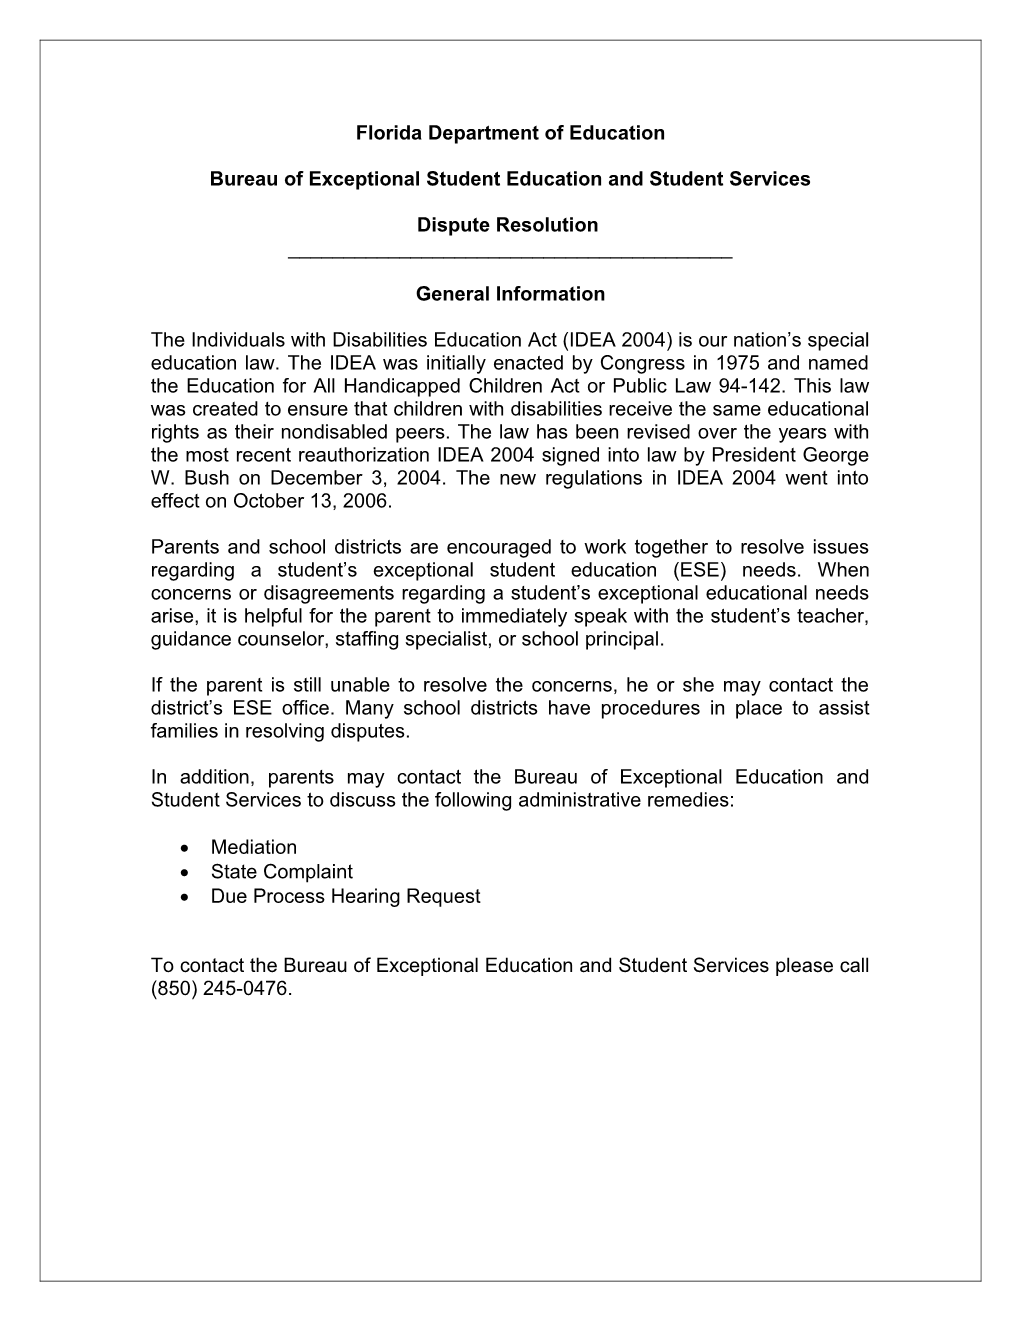 Bureau of Exceptional Student Education